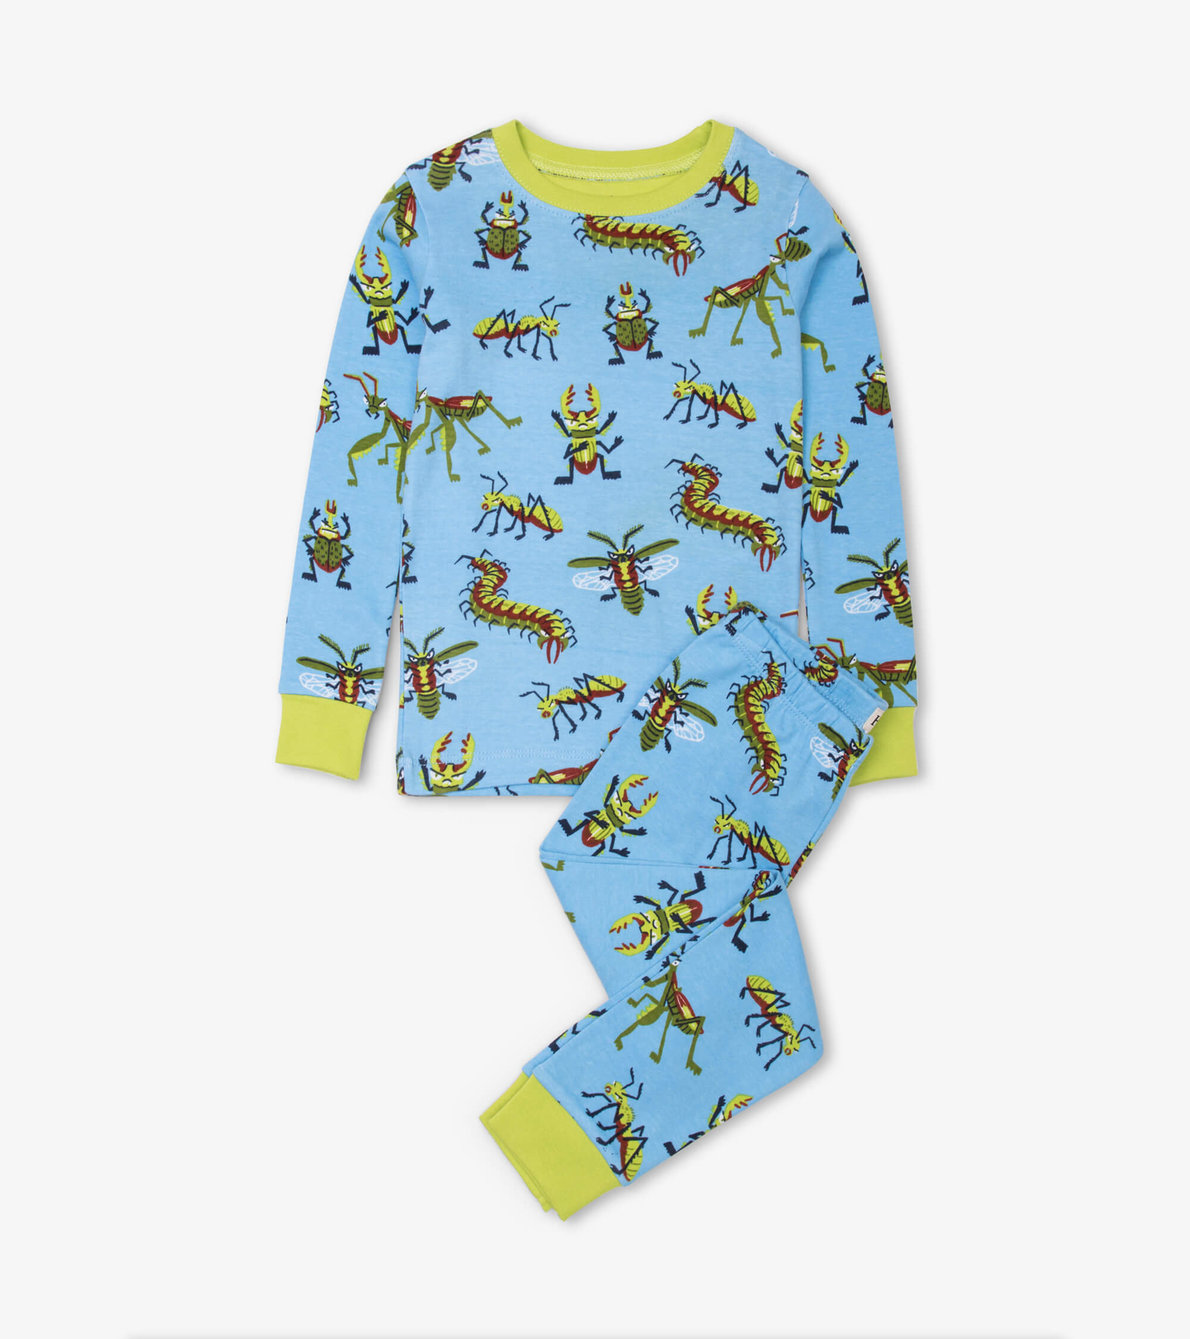 View larger image of Snug Bugs Organic Cotton Pajama Set